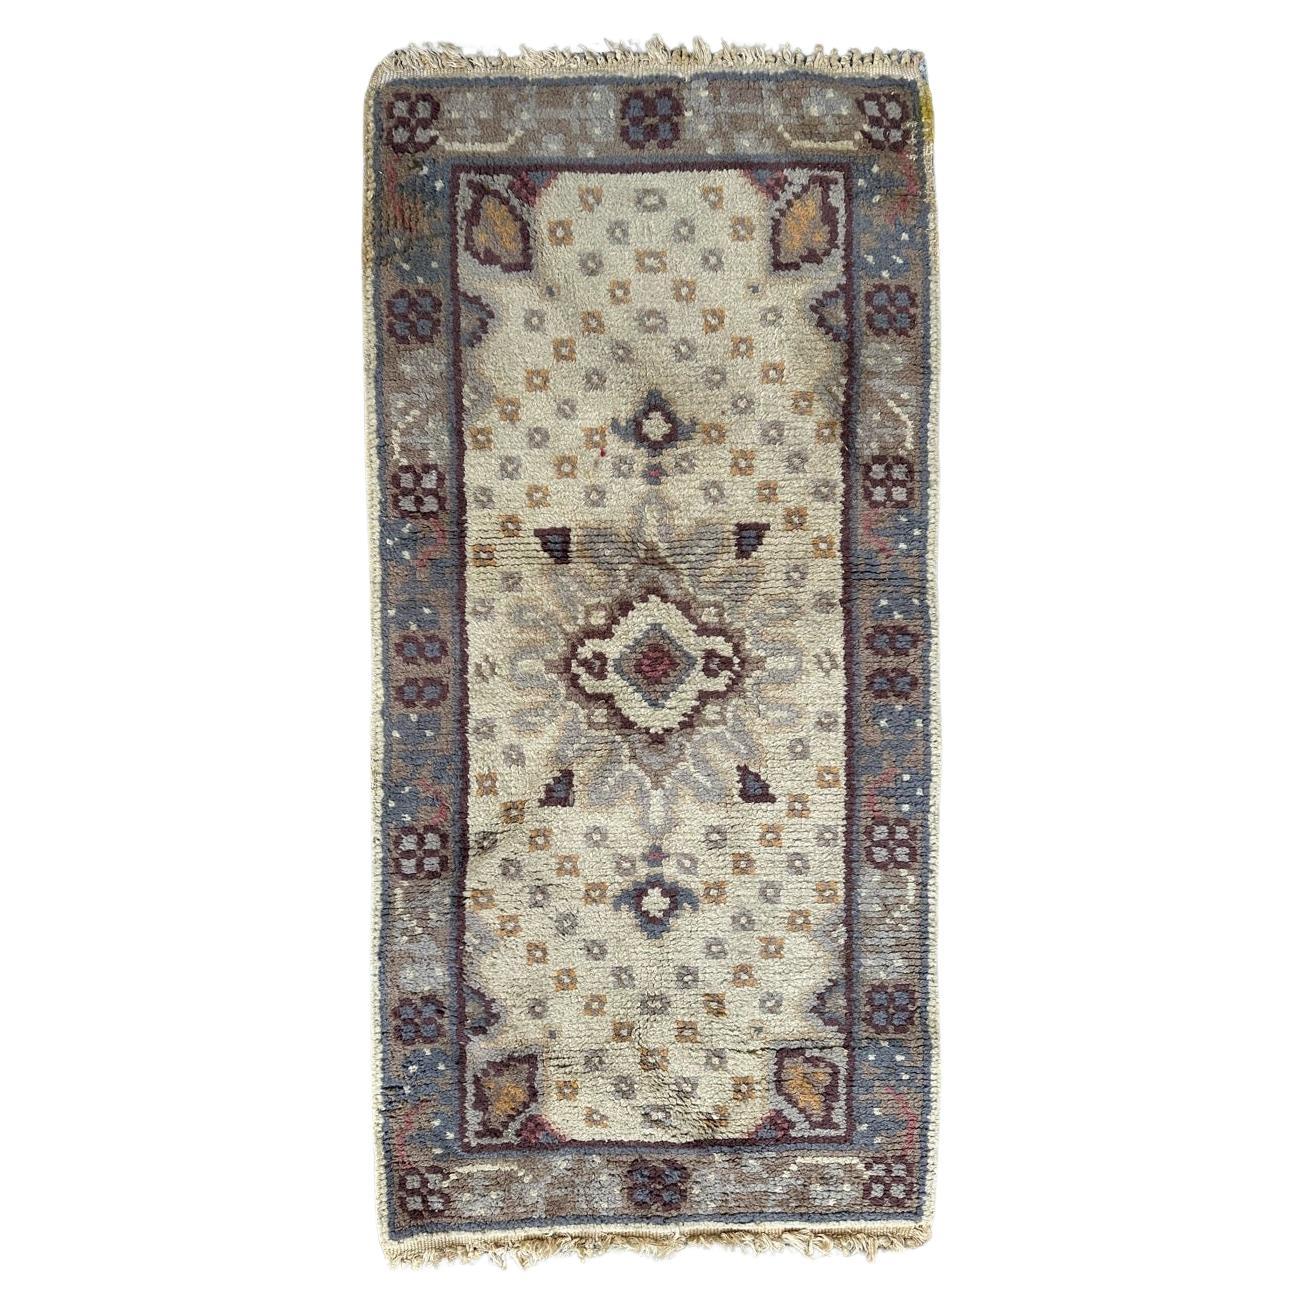 Bobyrug’s Beautiful early 20th century European rug